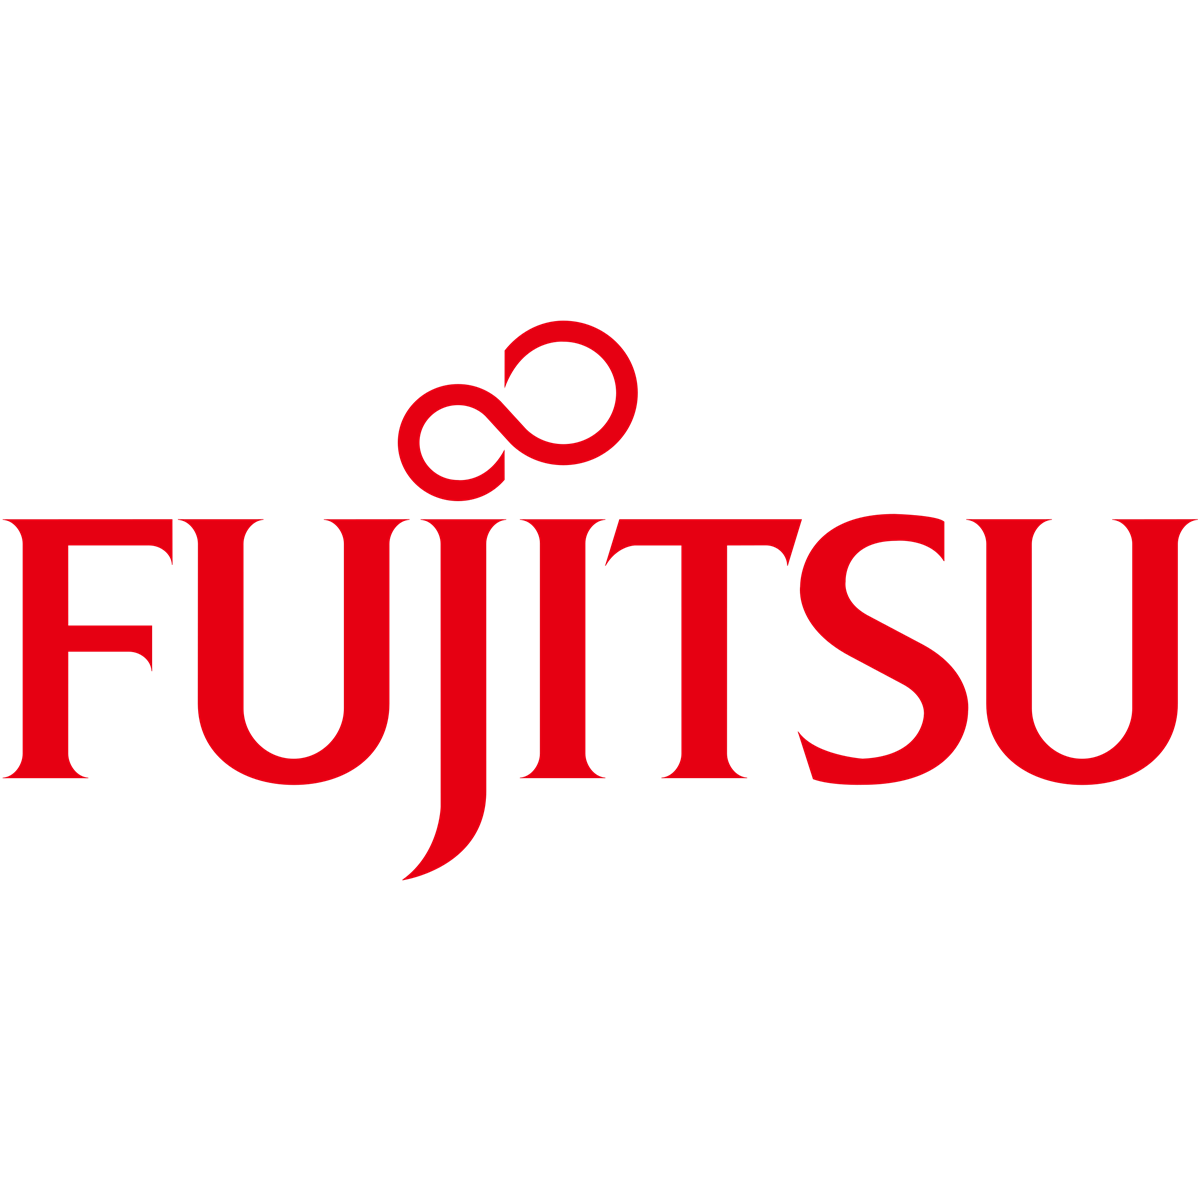 Fujitsu DX1/200S5 IFCard FC 2Port 16G x1